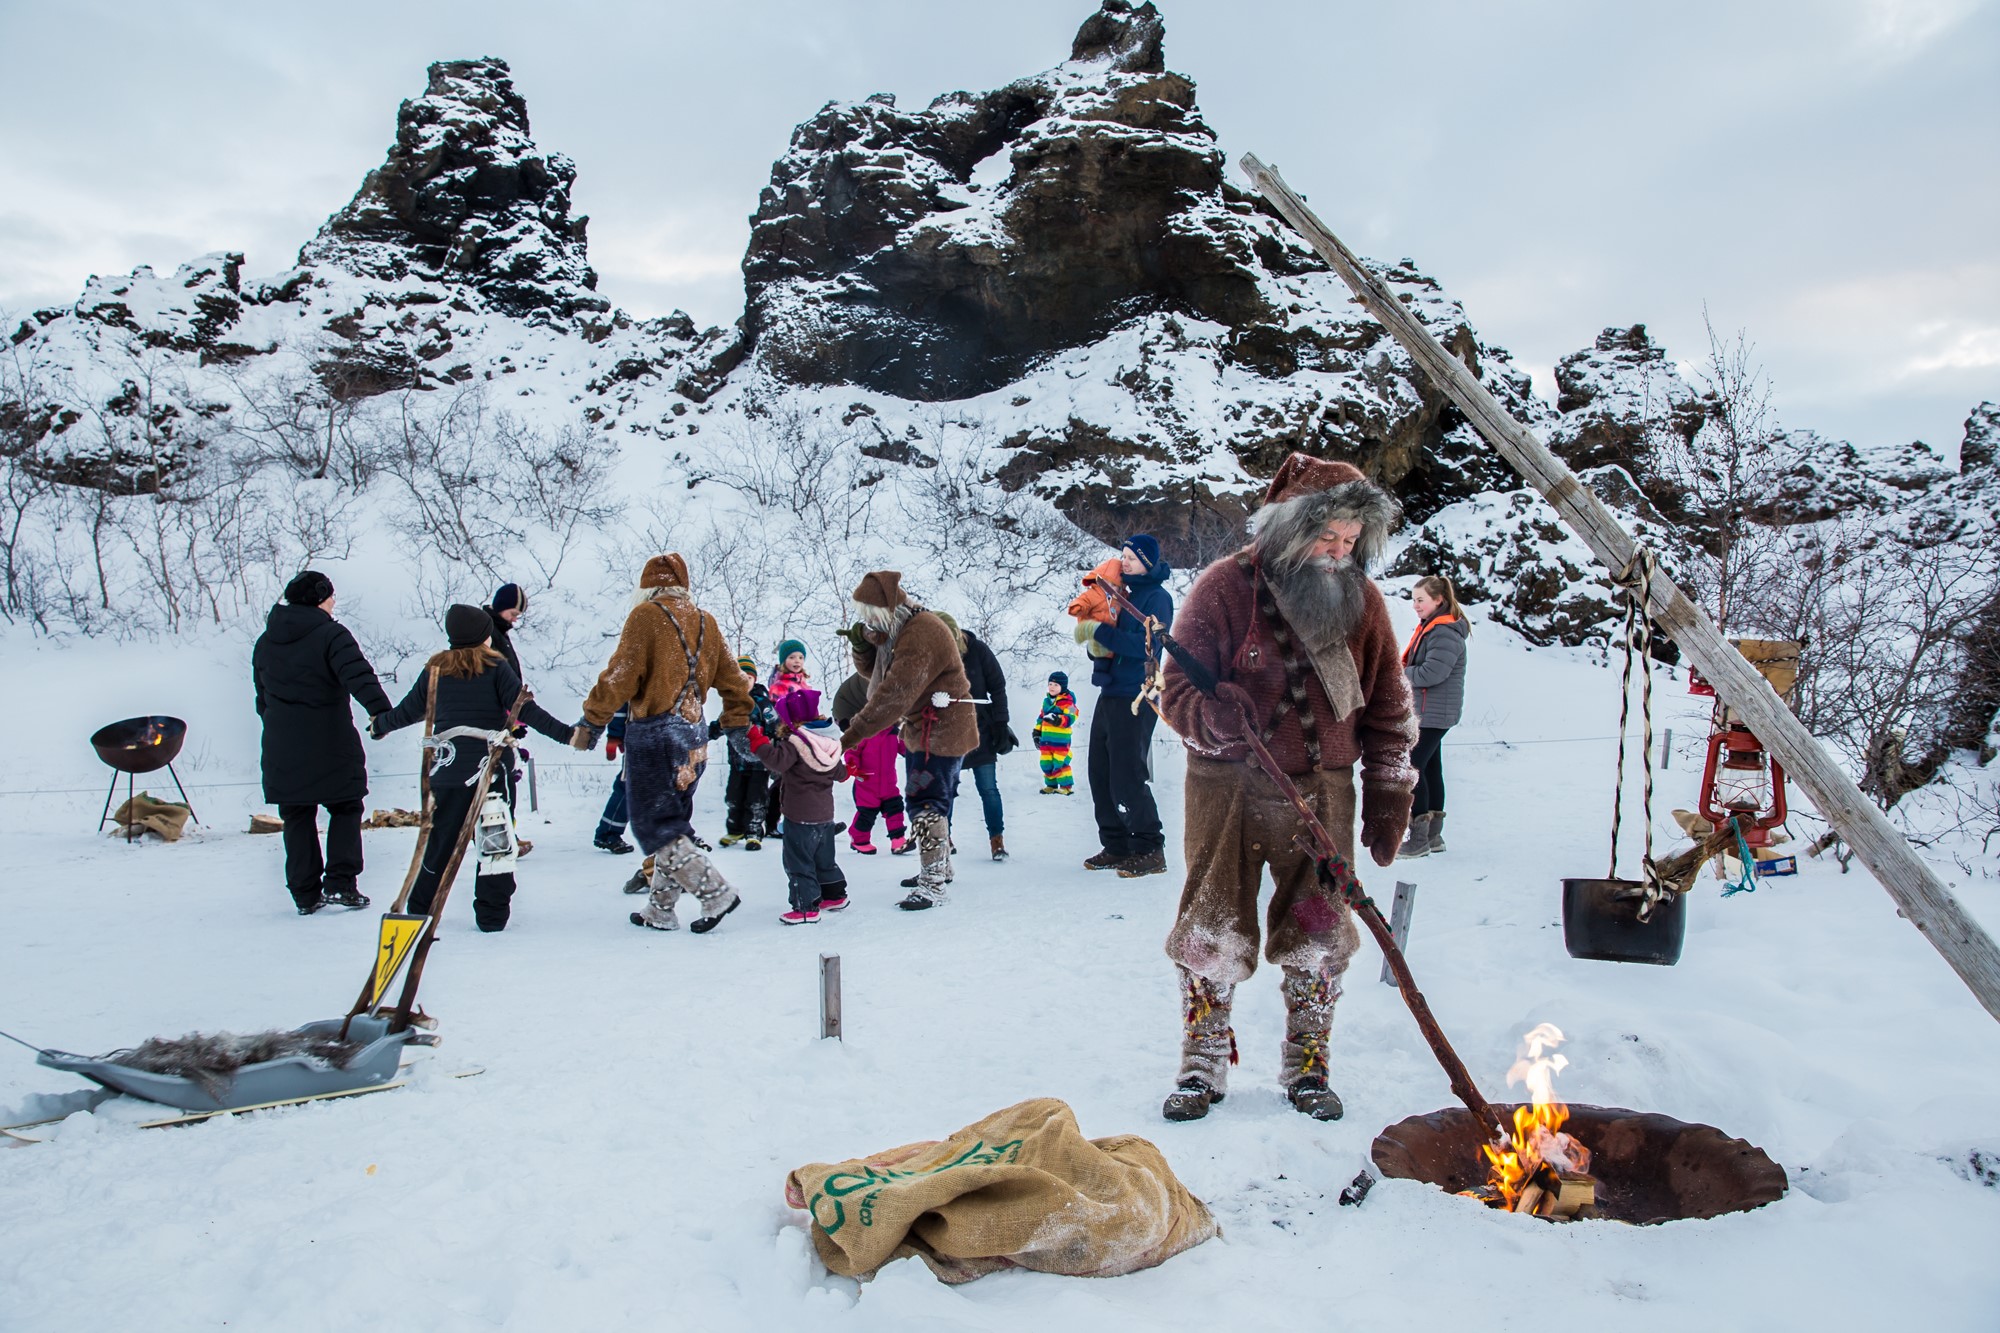 Jolasveinarnir, the Yule Lads, pictured having festive fun at Dimmuborgir in the North of Iceland